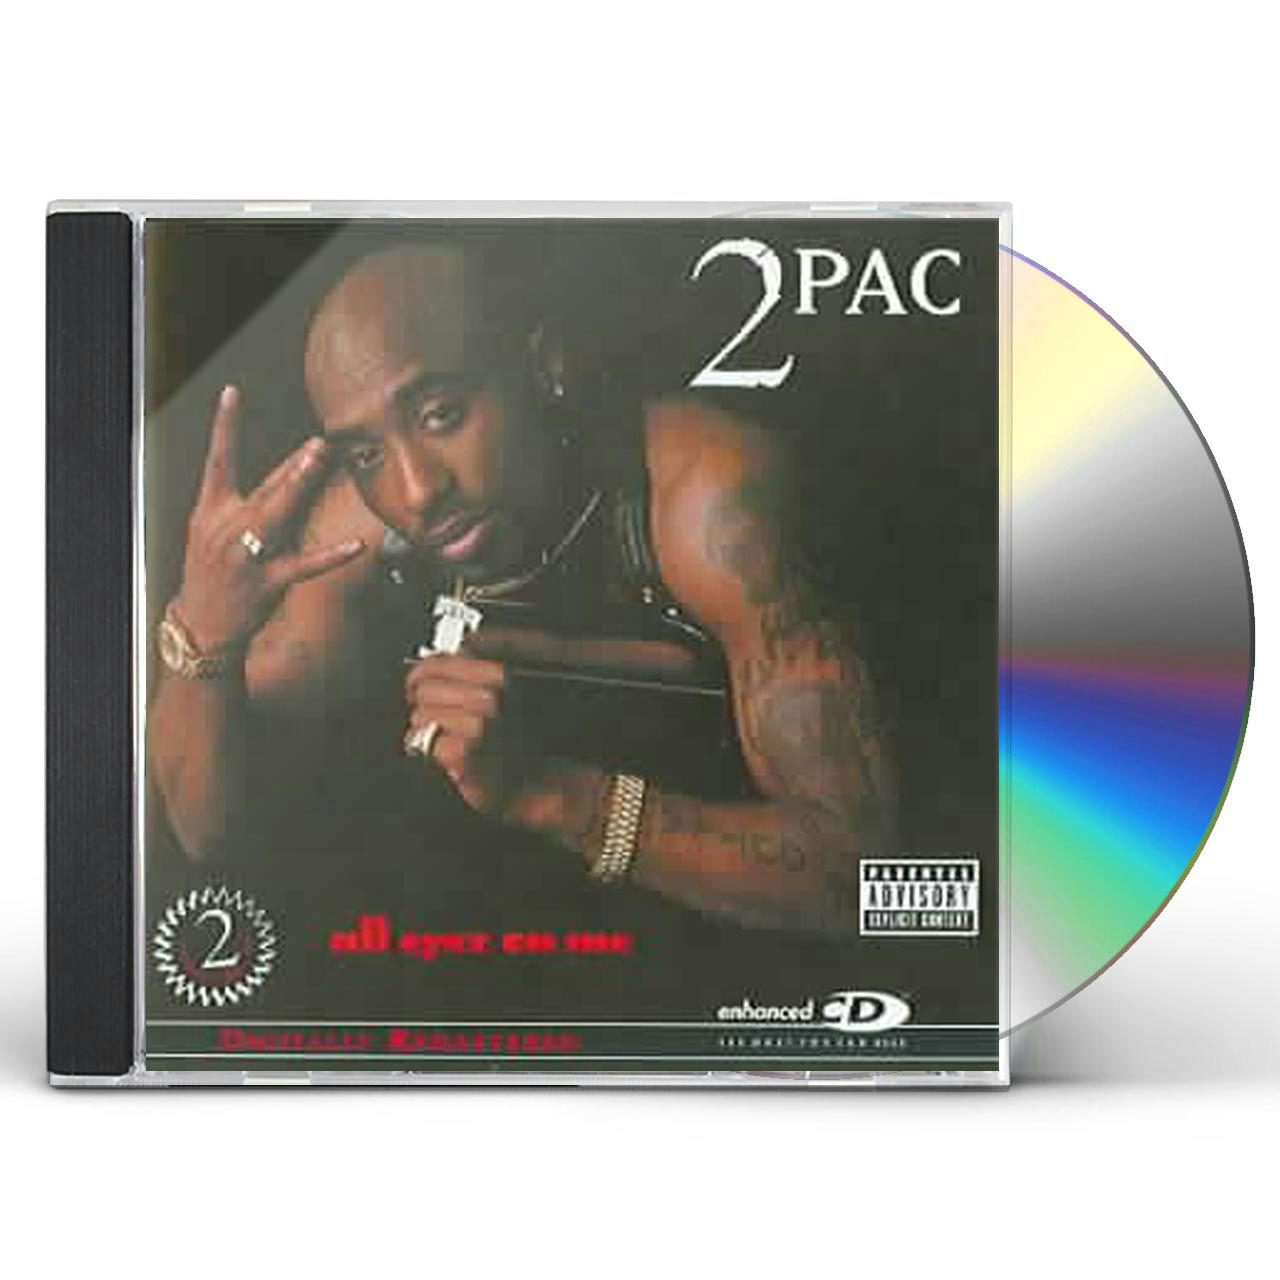 2pac all eyez on me album cd